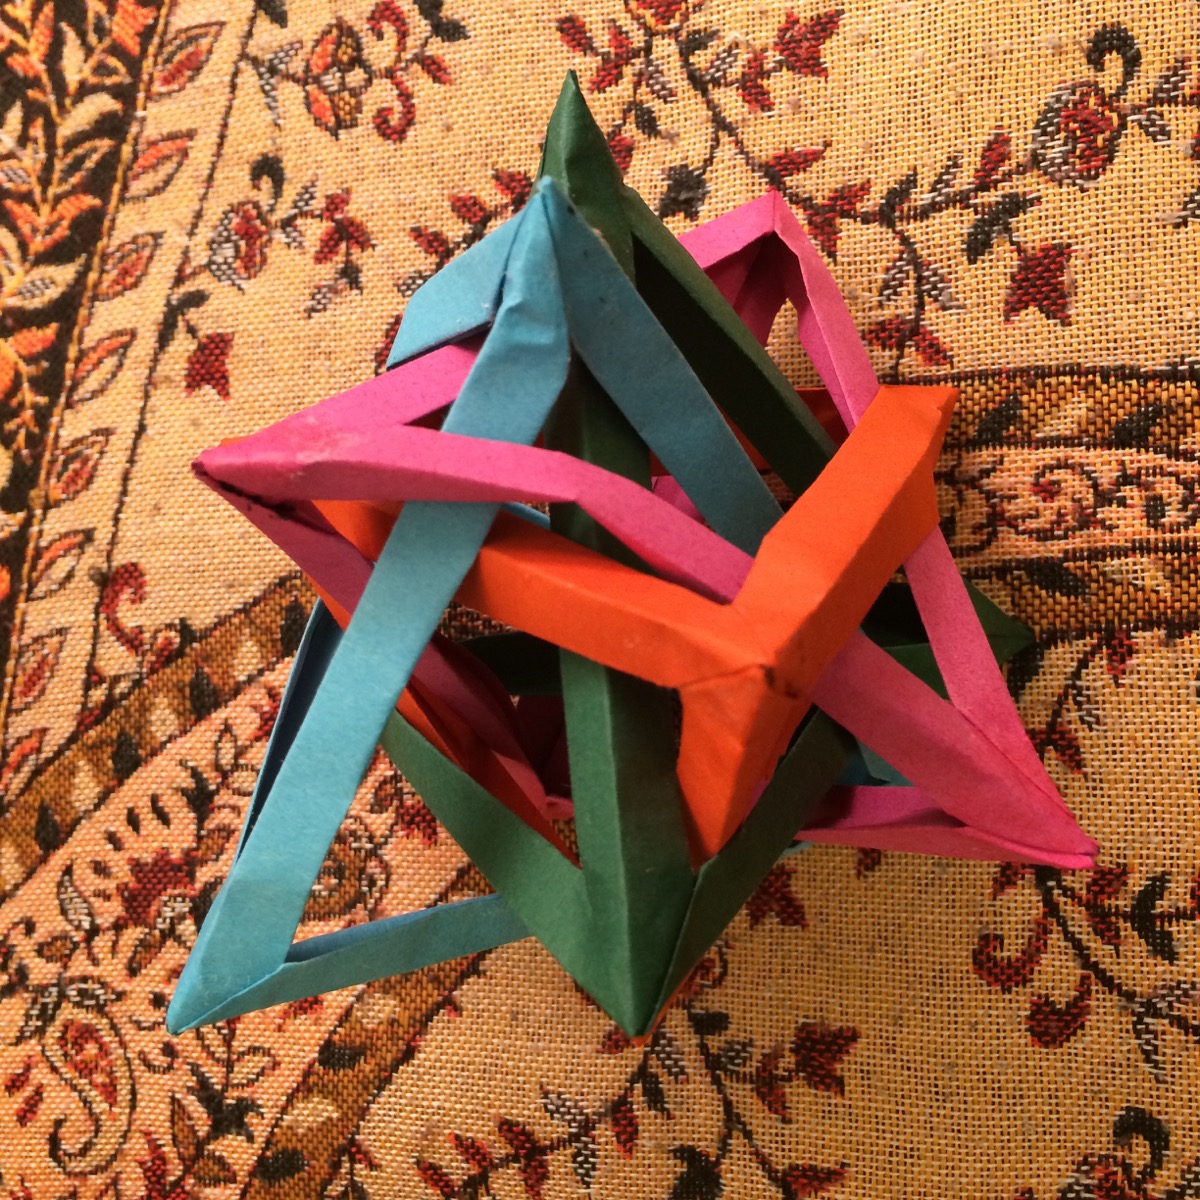 tetrahedron_1